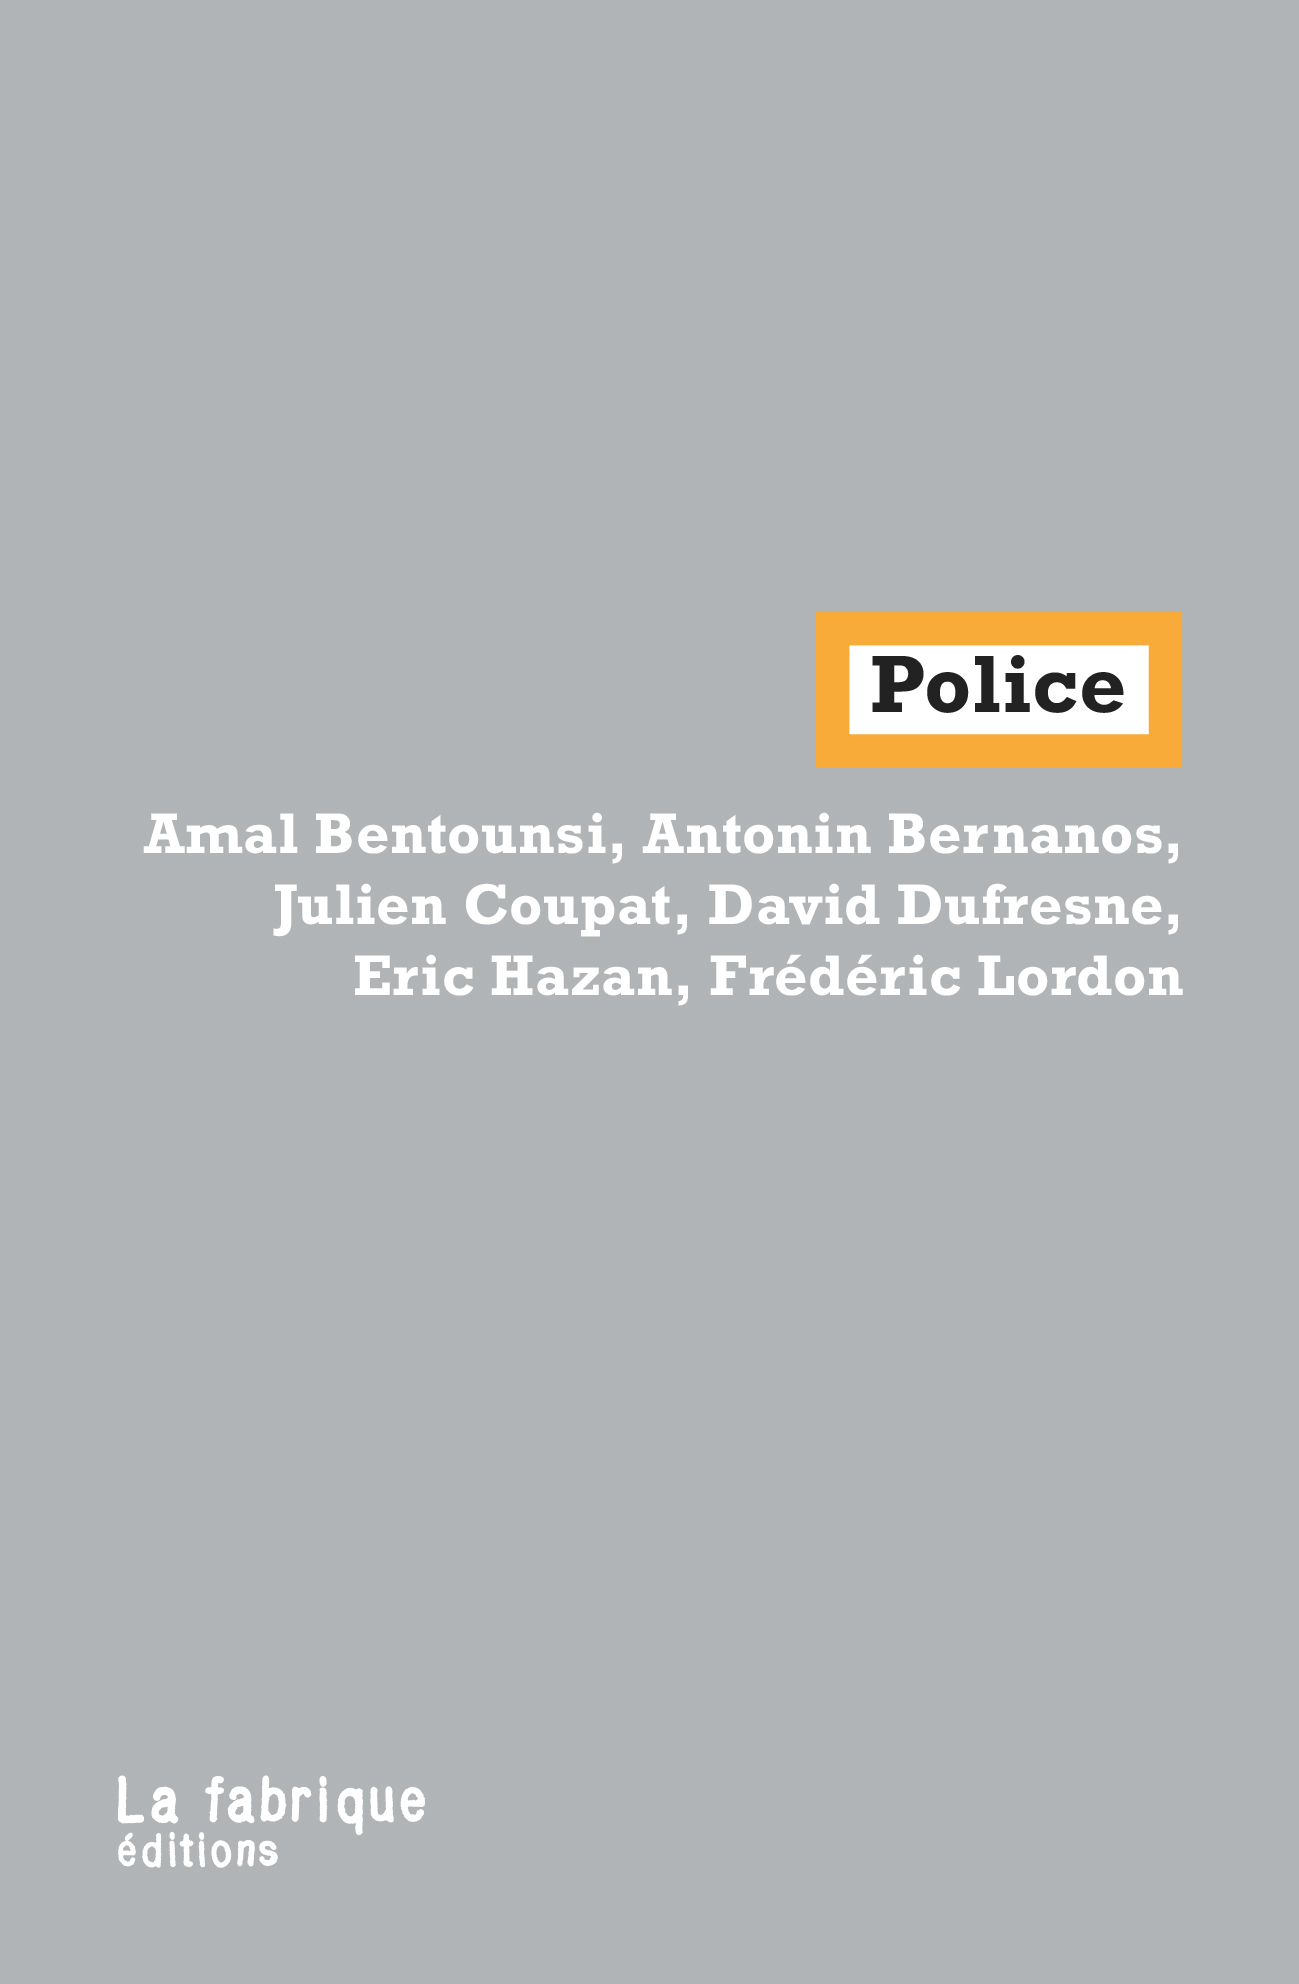 Police_Amal.BENTOUNSI-Antonin.BERNANOS-Julien.COUPAT-David.DUFRESNE-Eric.Hazan=Frederic.LORDON_La.Fabrique_2020